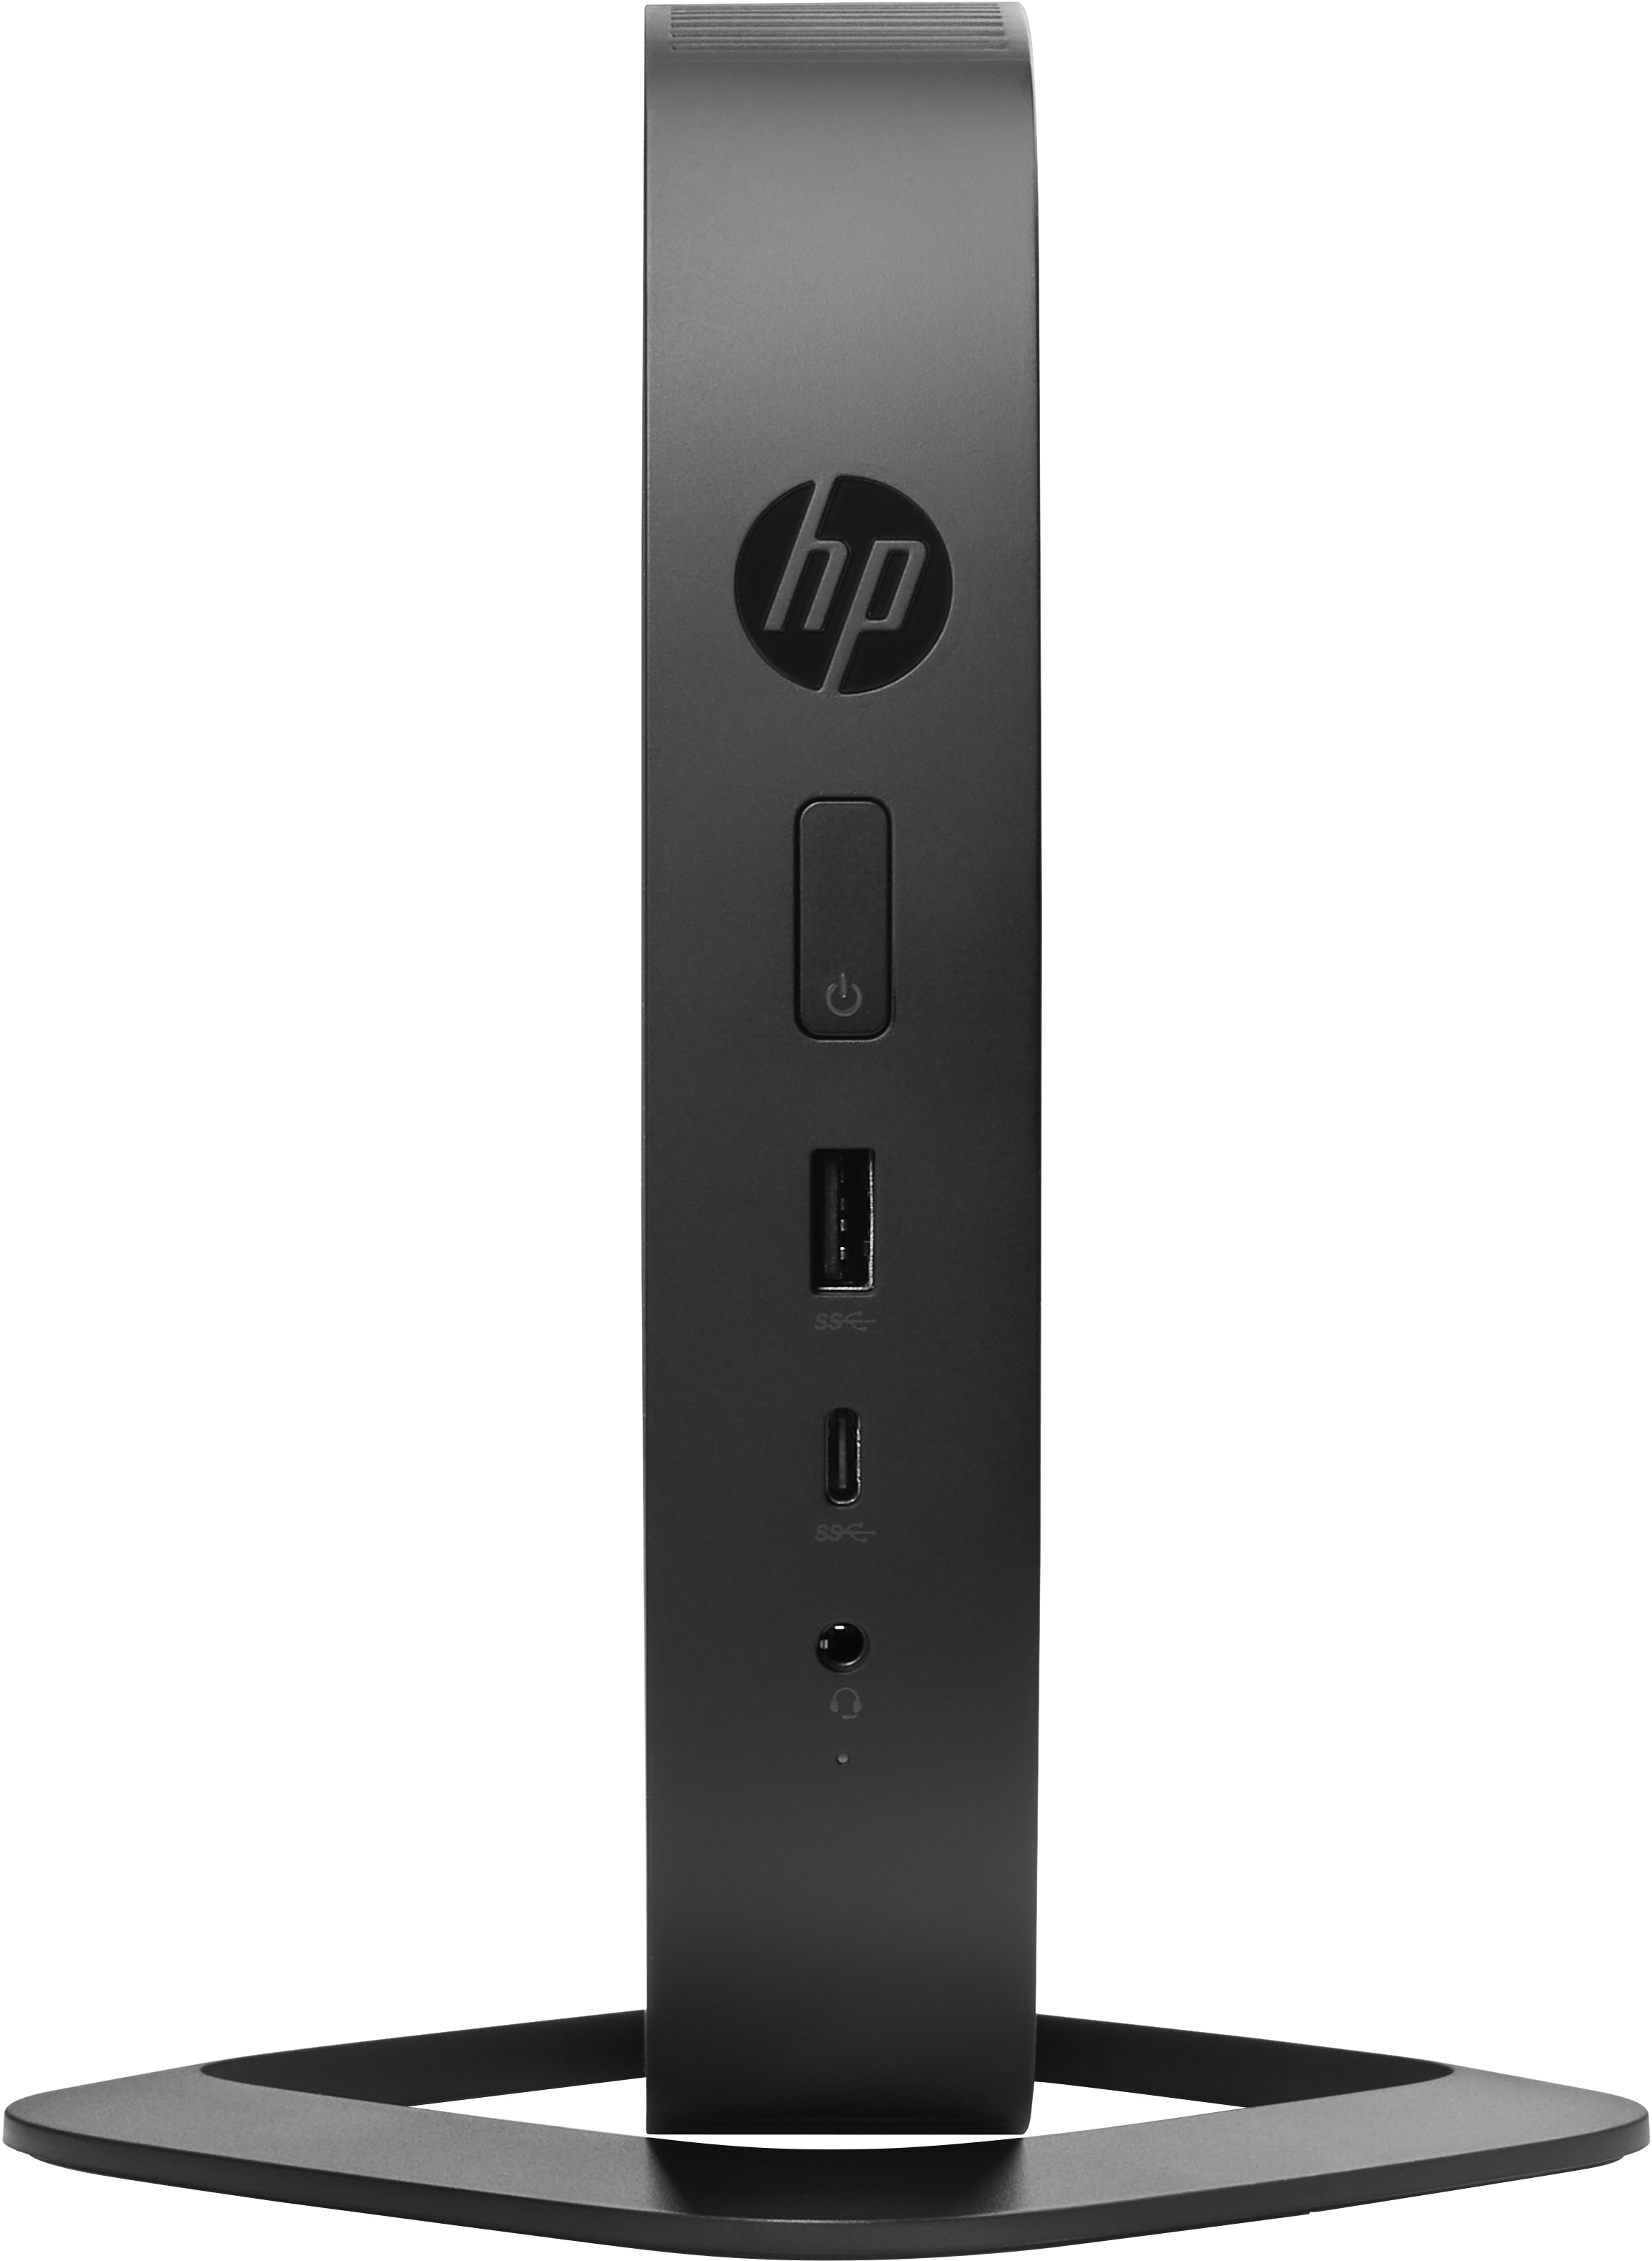 HP t530 - Thin client - tower - 1 x GX-215JJ 1.5 GHz - RAM 4 GB - flash 32 GB - MLC - Radeon R2E - GigE - WLAN: Bluetooth, 802.11a/b/g/n/ac - Win 10 IoT Enterprise 64-bit - monitor: none - keyboard: US